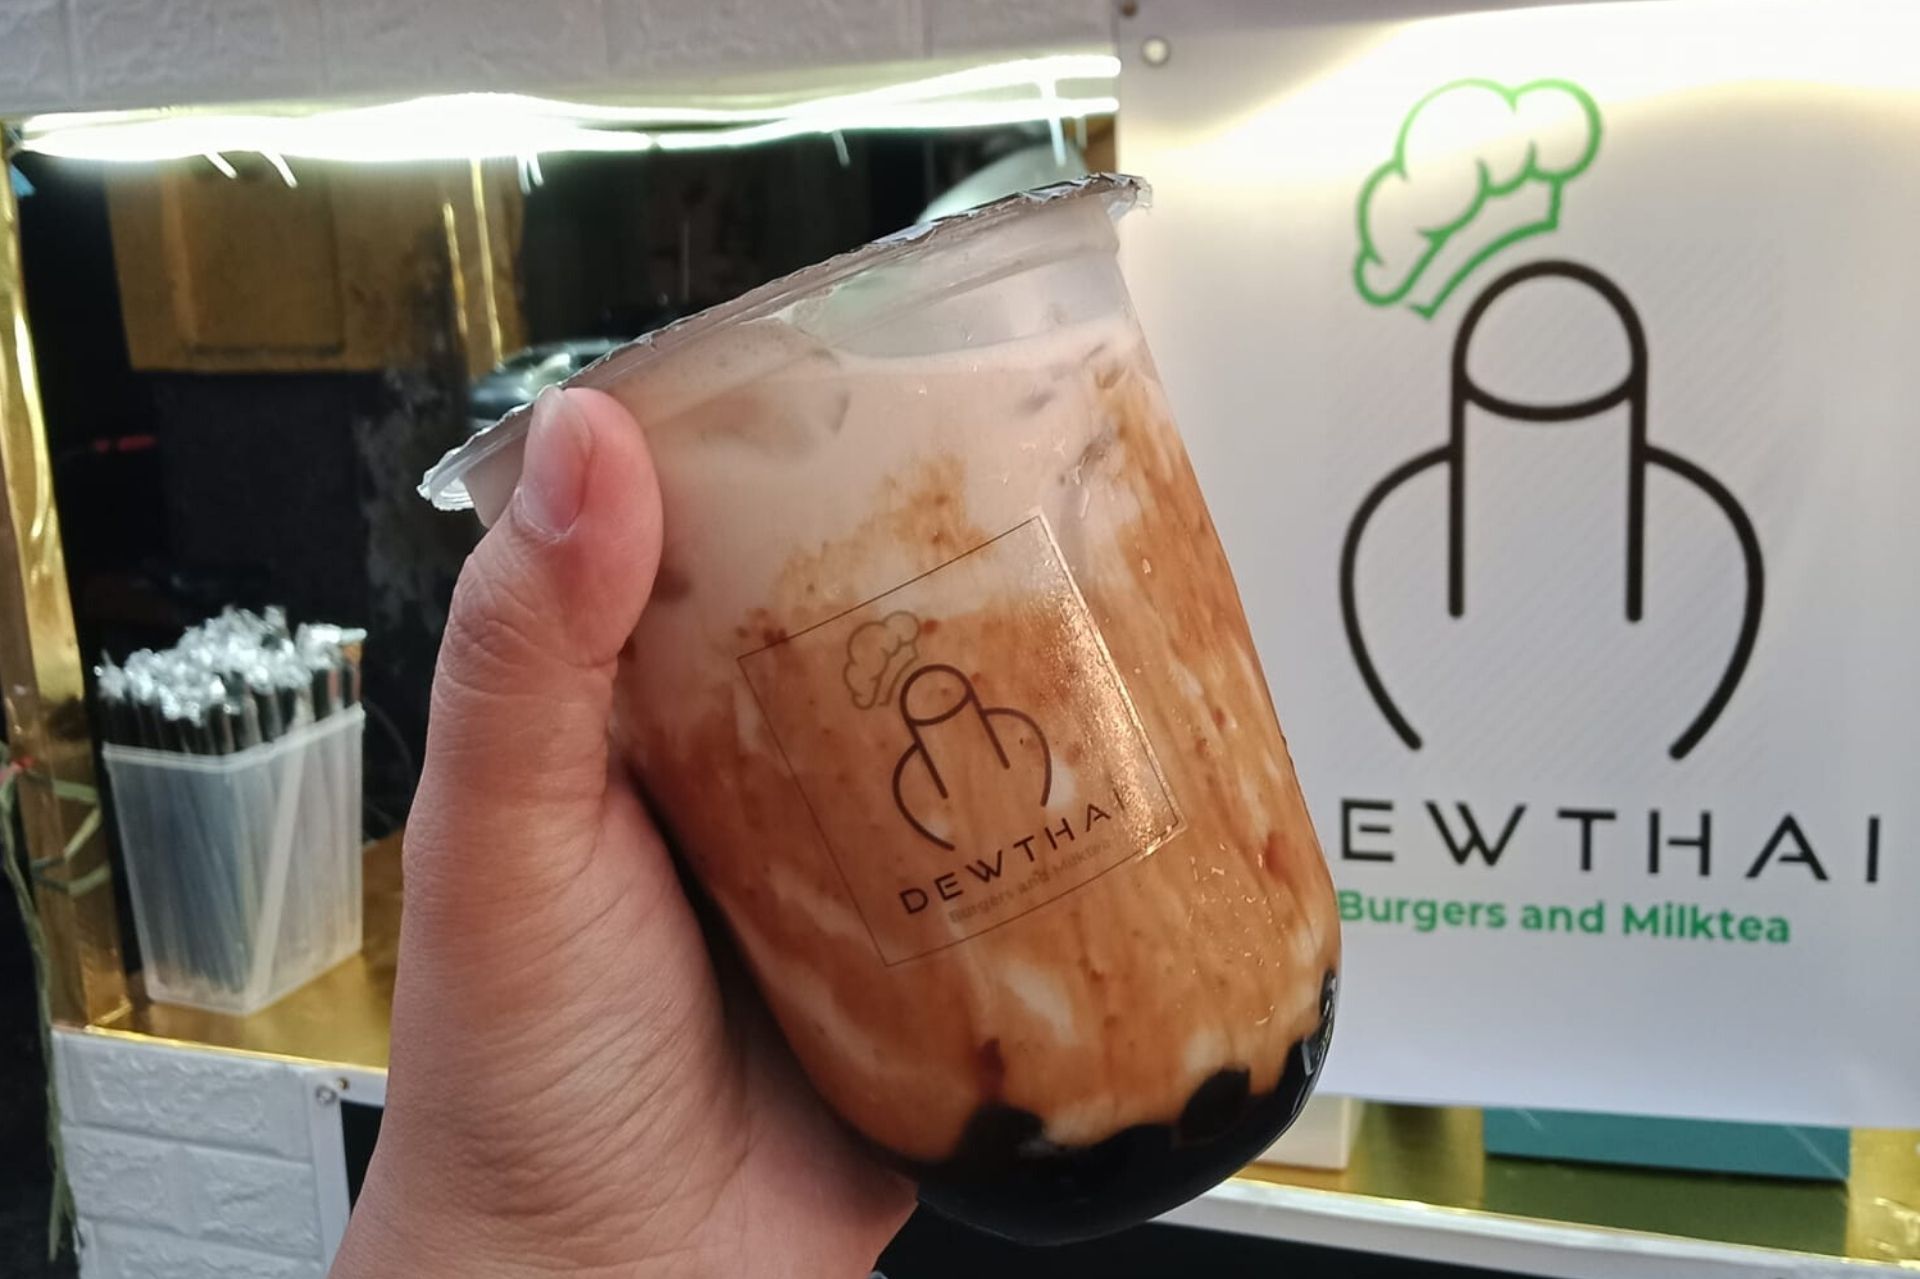 Got tea? This Thai-inspired beverage shop in Manila has an interesting